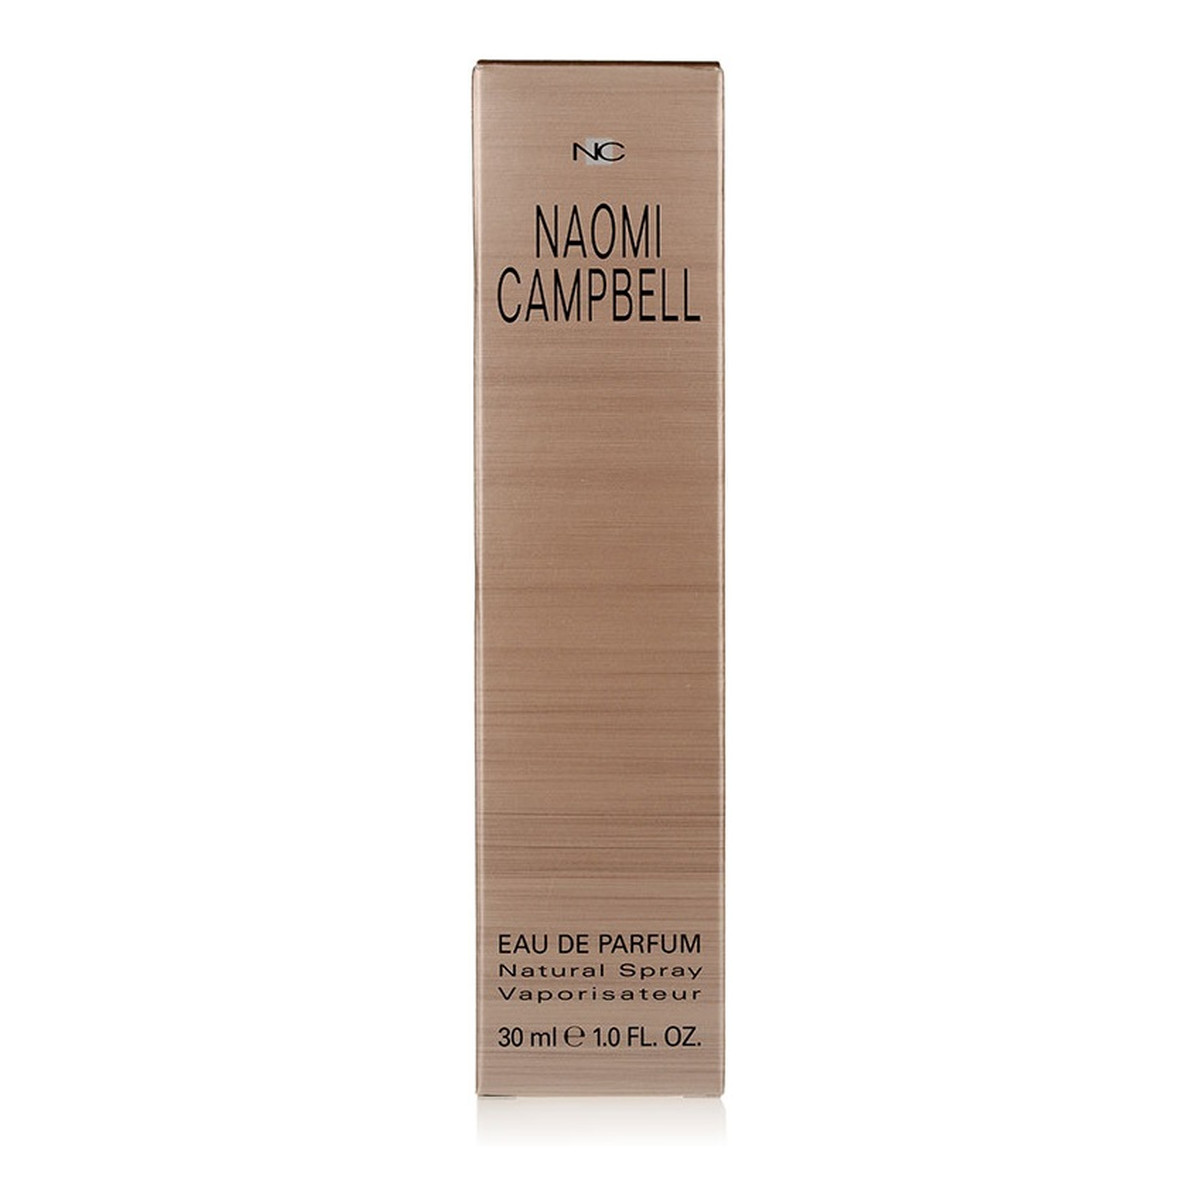 Naomi Campbell Naomi Campbell Woda perfumowana dla kobiet 30ml